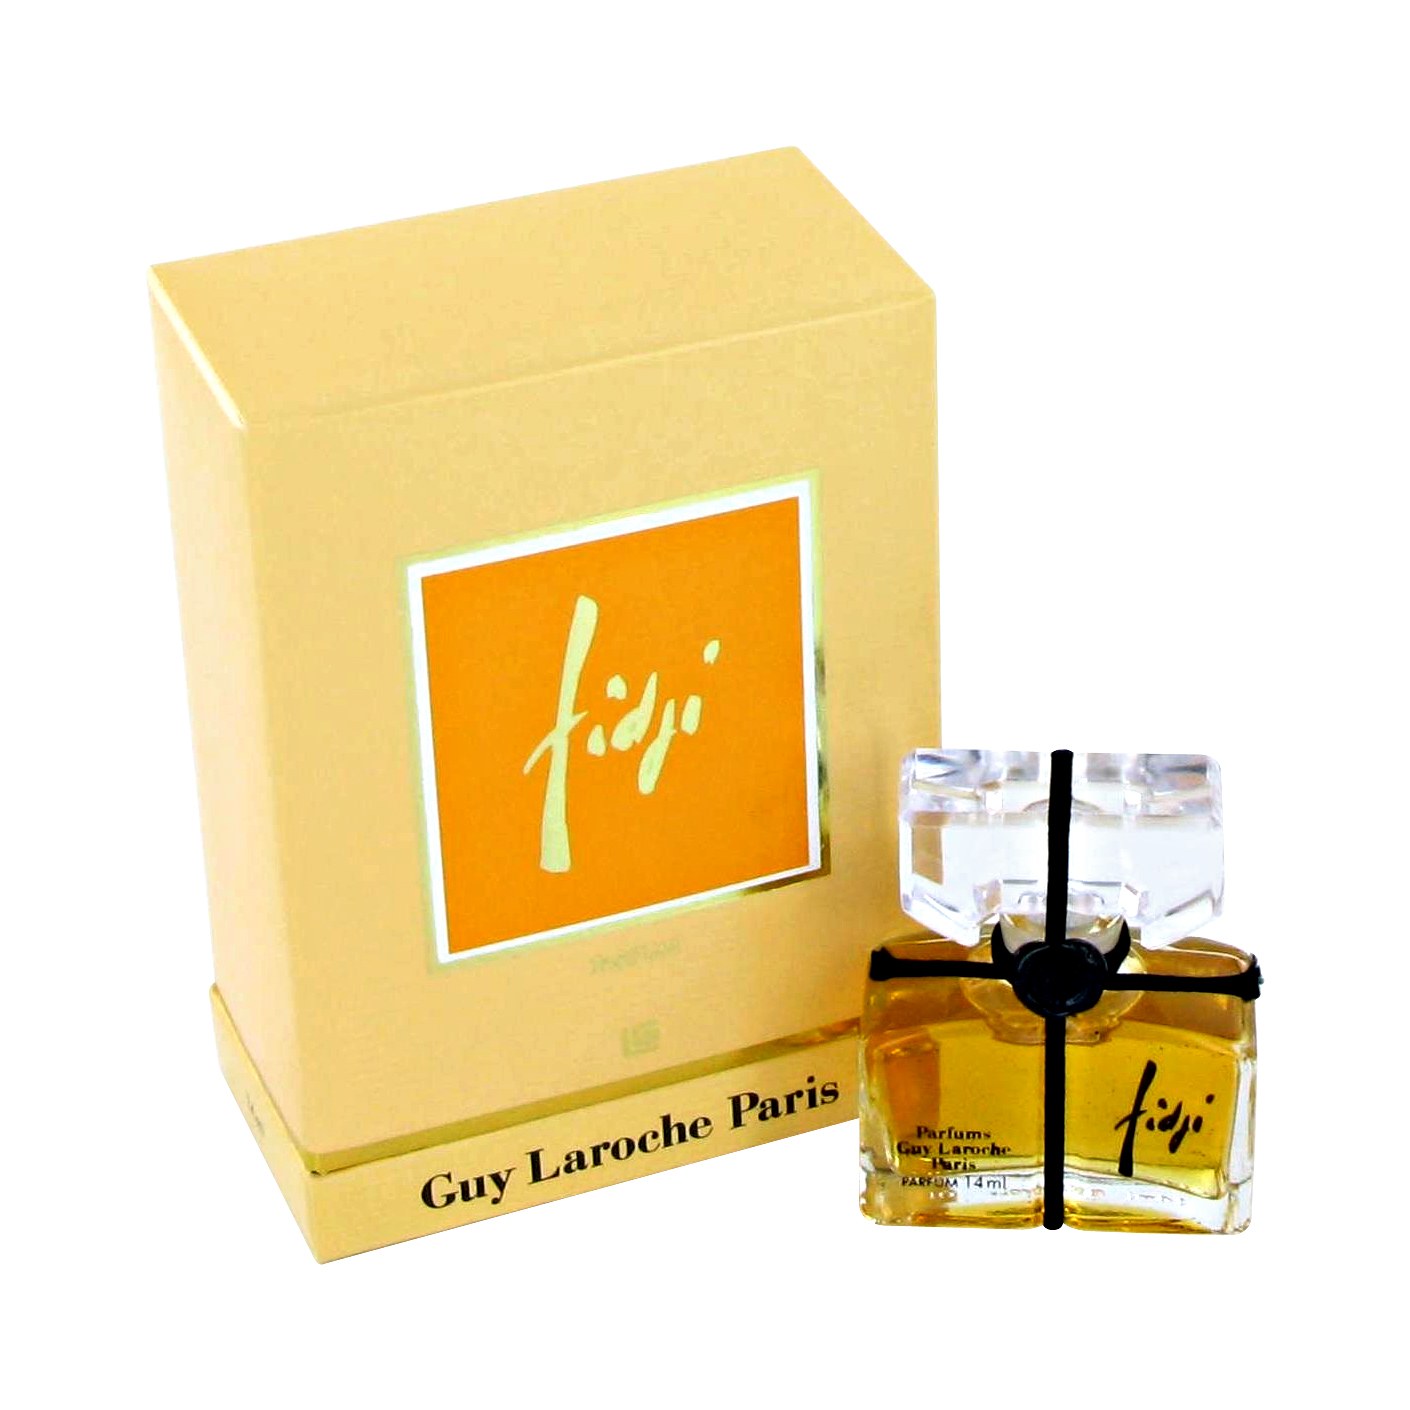 Guy Laroche Fidji Parfum